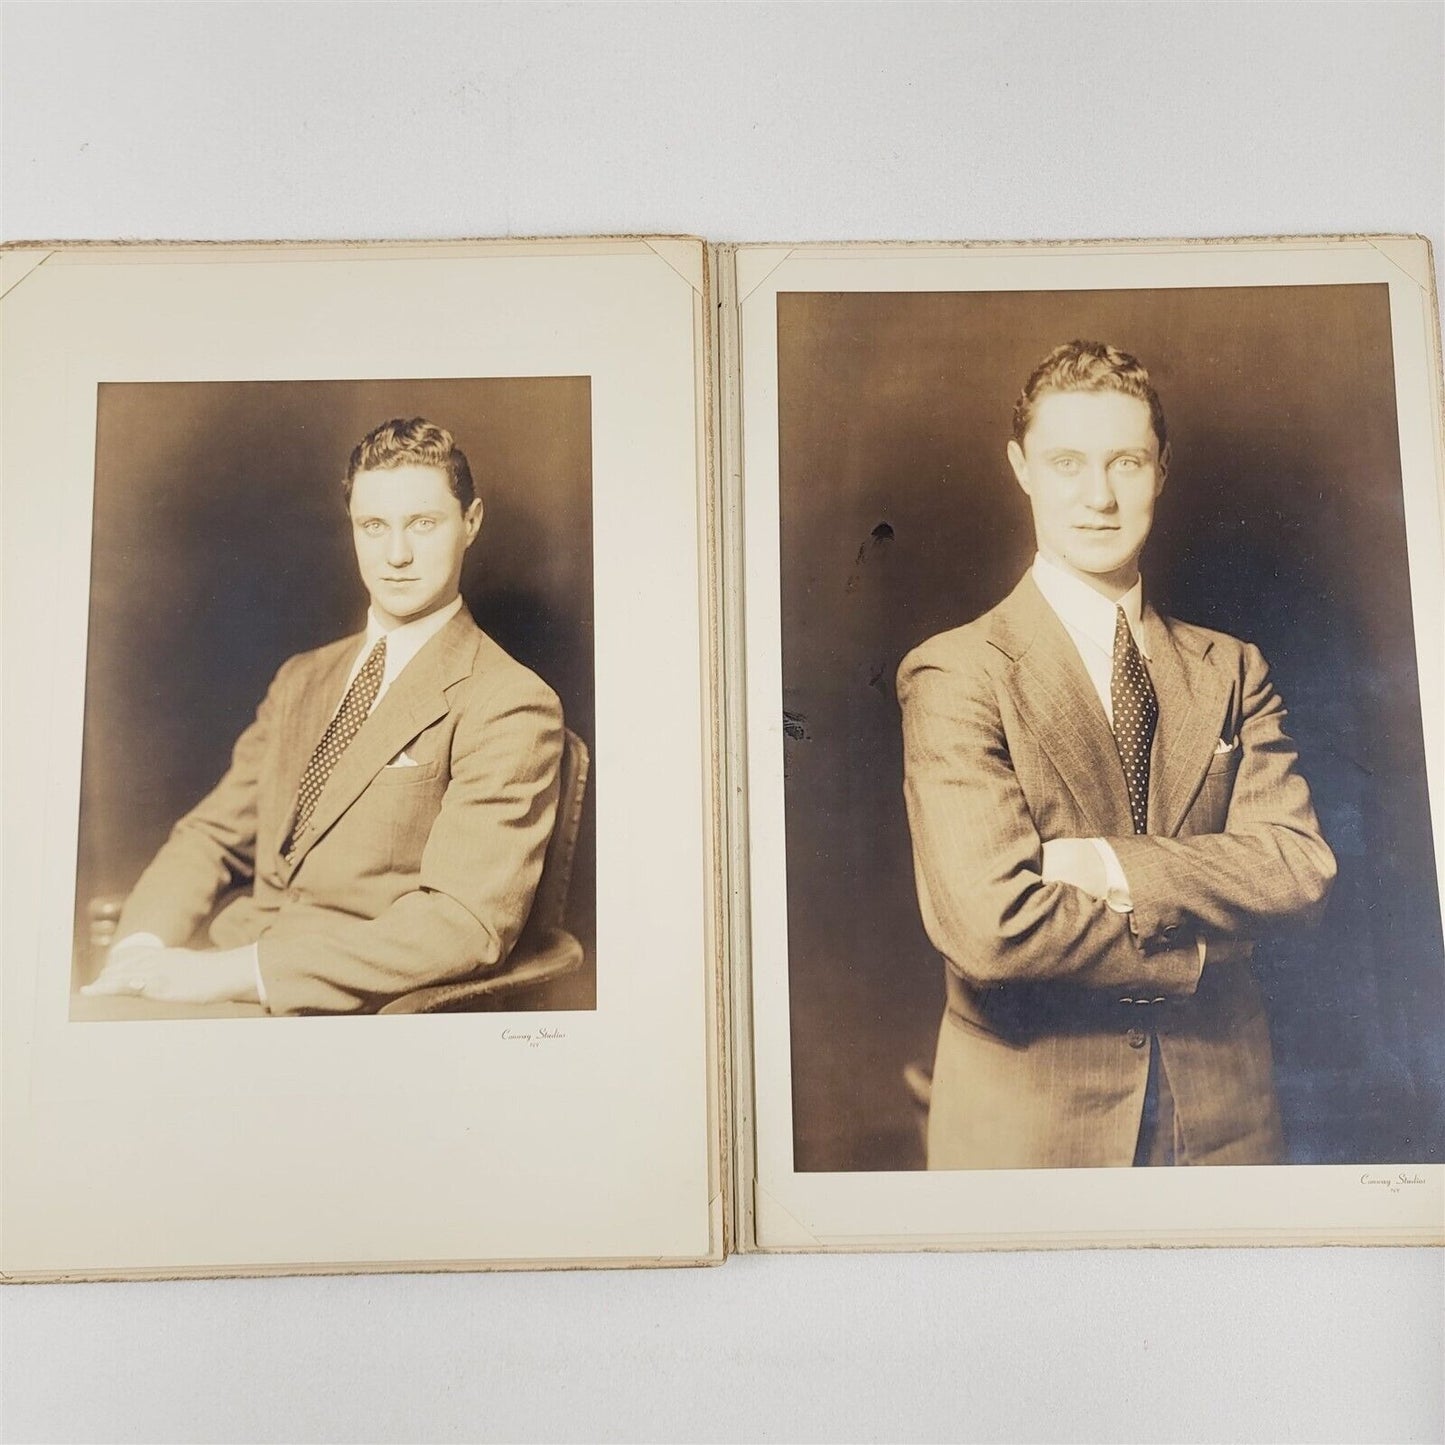 18 Vintage Photos Large Portraits 1920s-50s - 4.5x6 to 11x14 Photography Lot